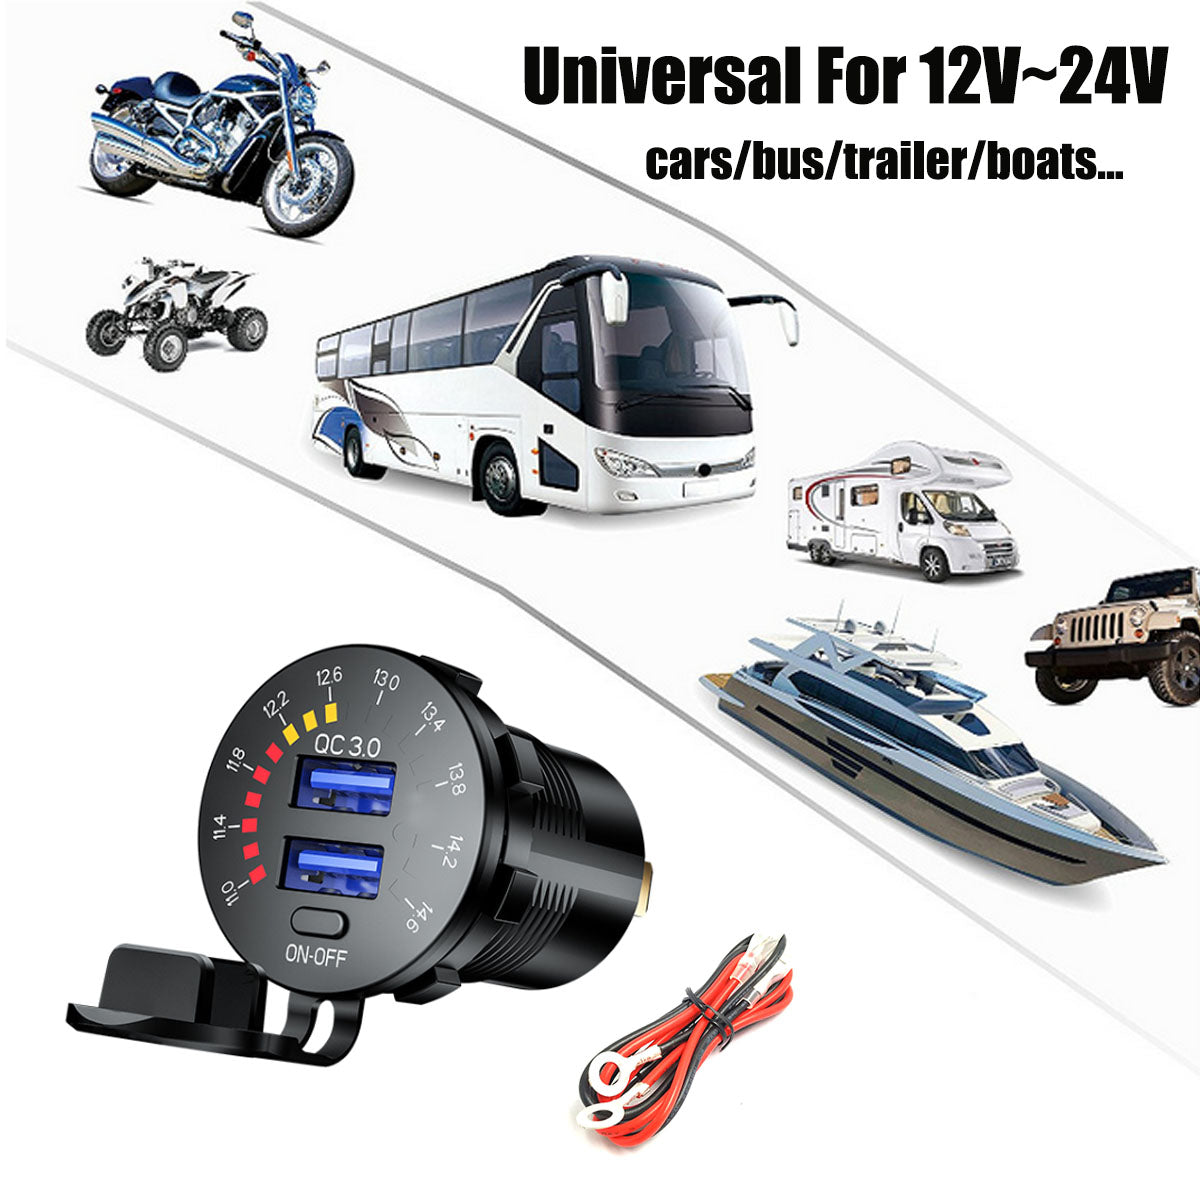 Dual USB Car Charger Socket Port Fast Charging 12-24V